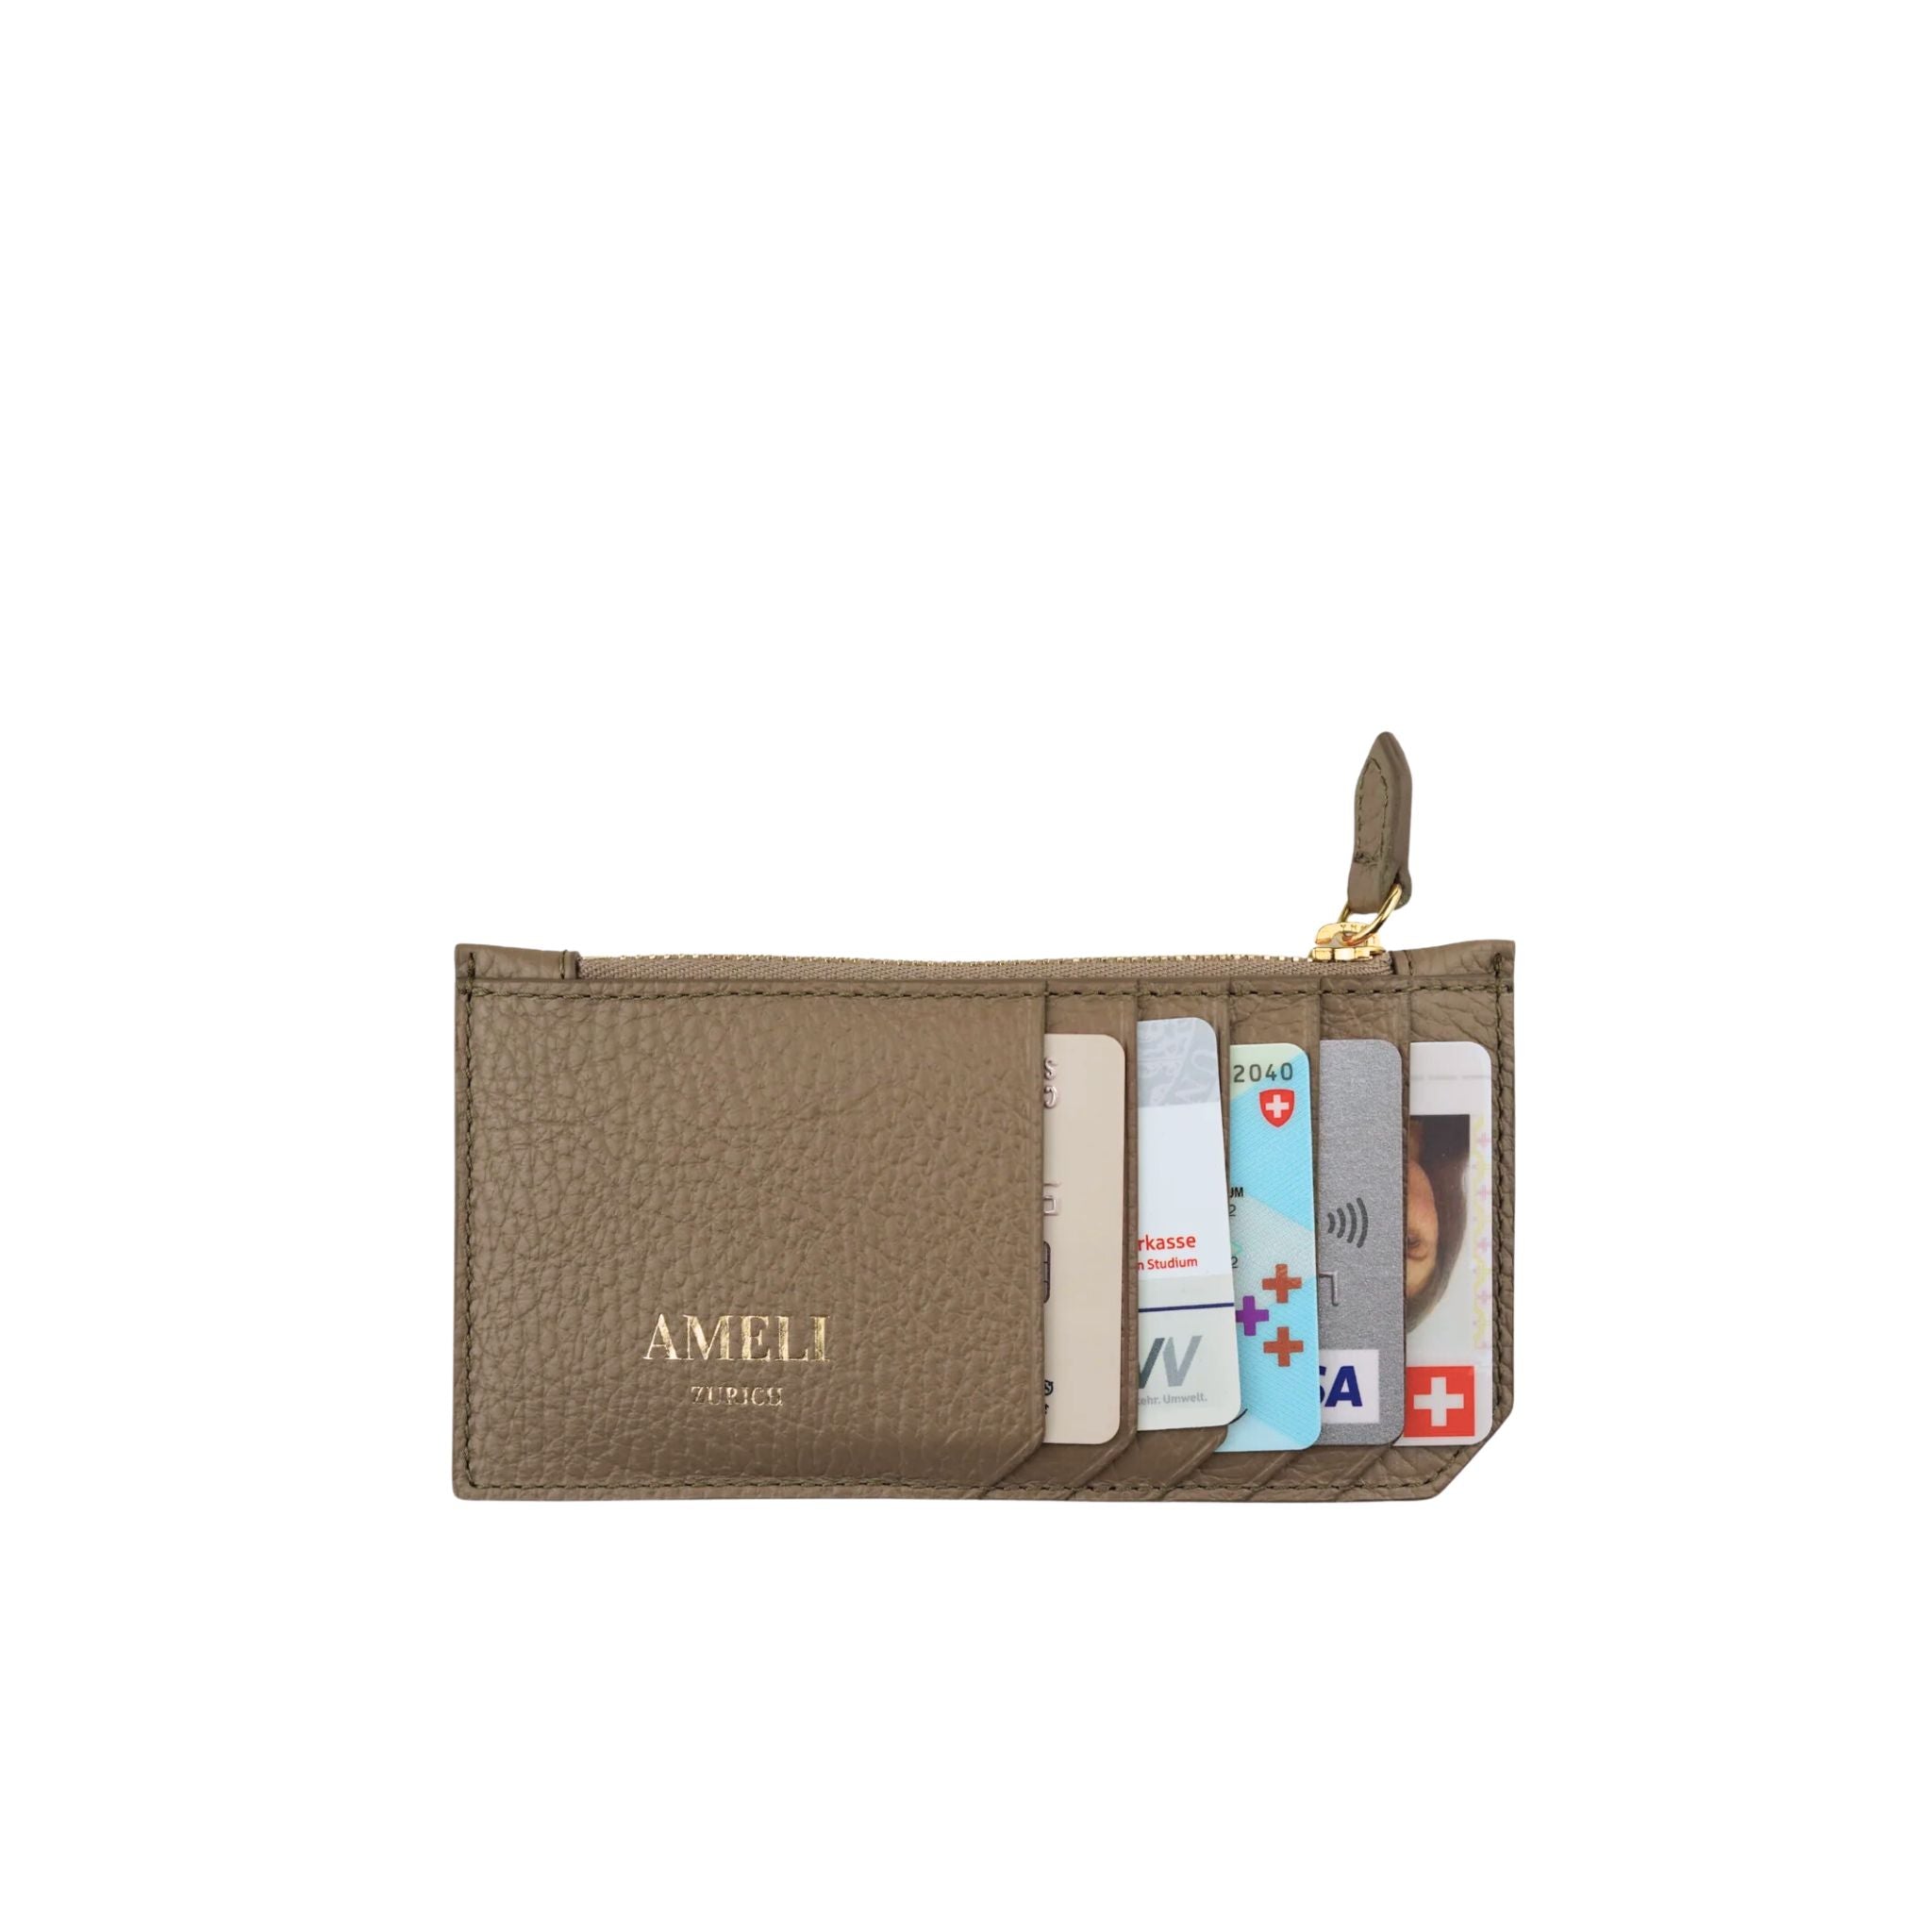 AMELI Zurich | Card holder | Greige | Soft Grain Leather | Front